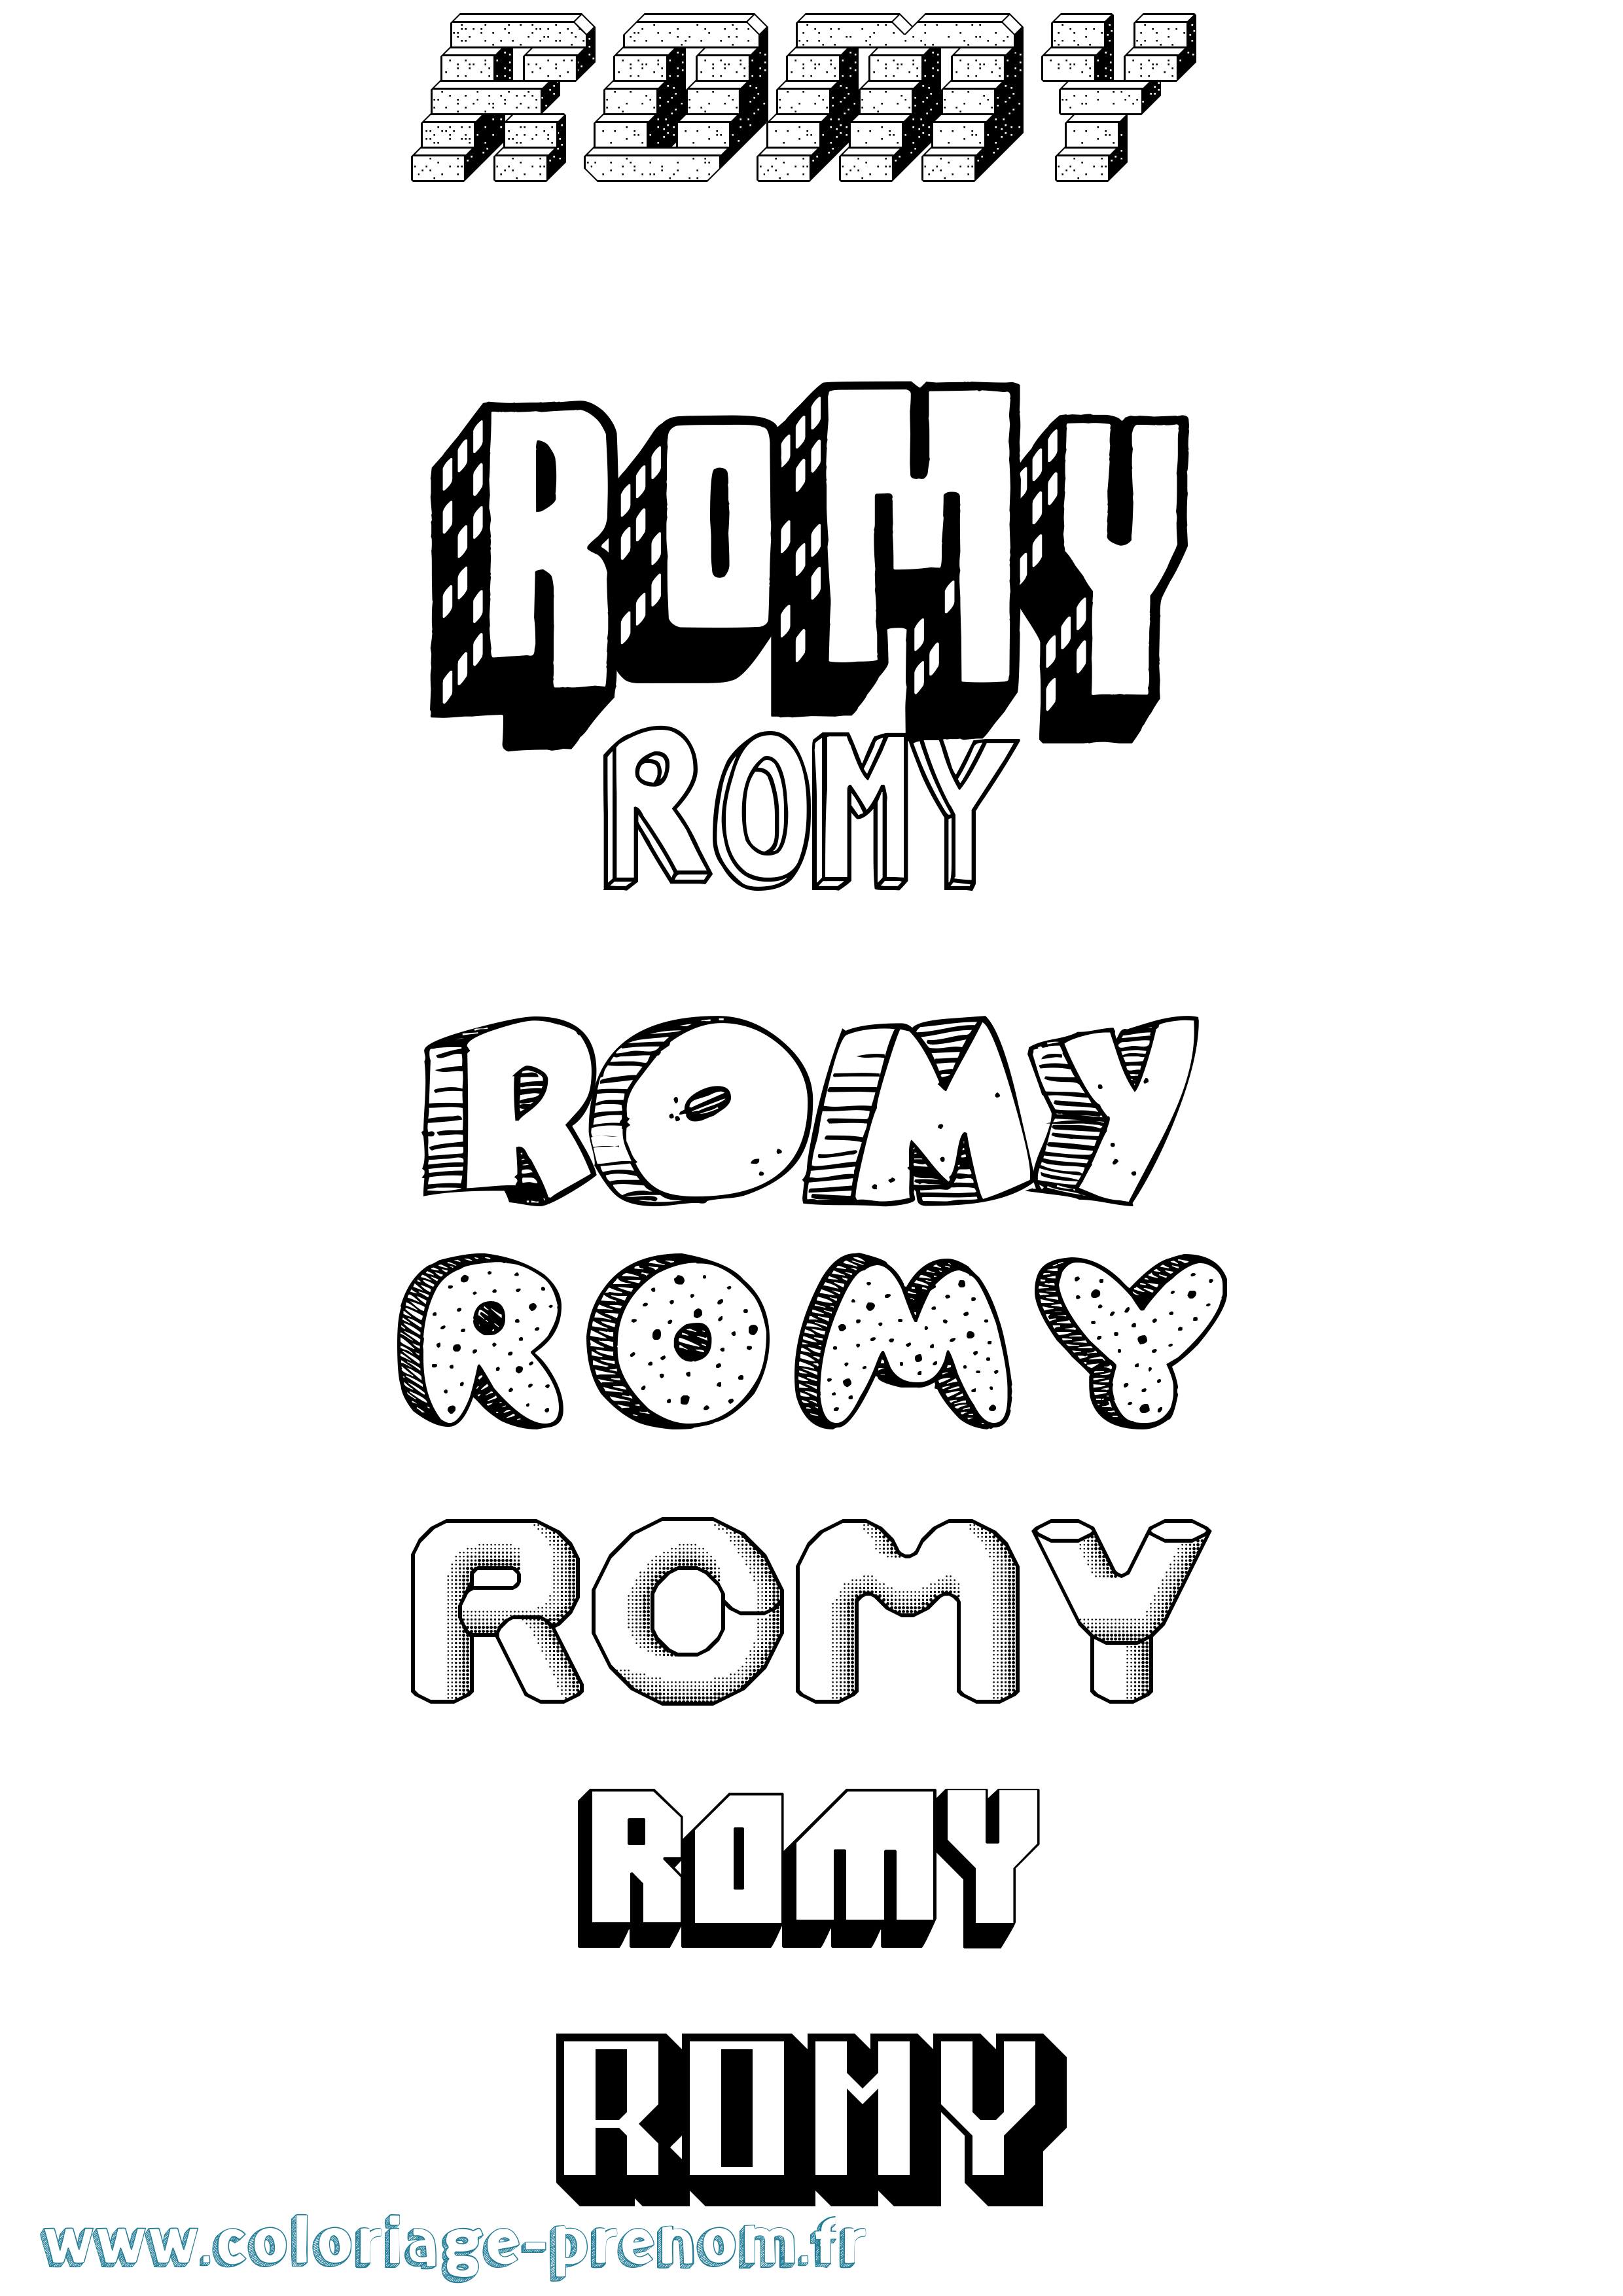 Coloriage prénom Romy